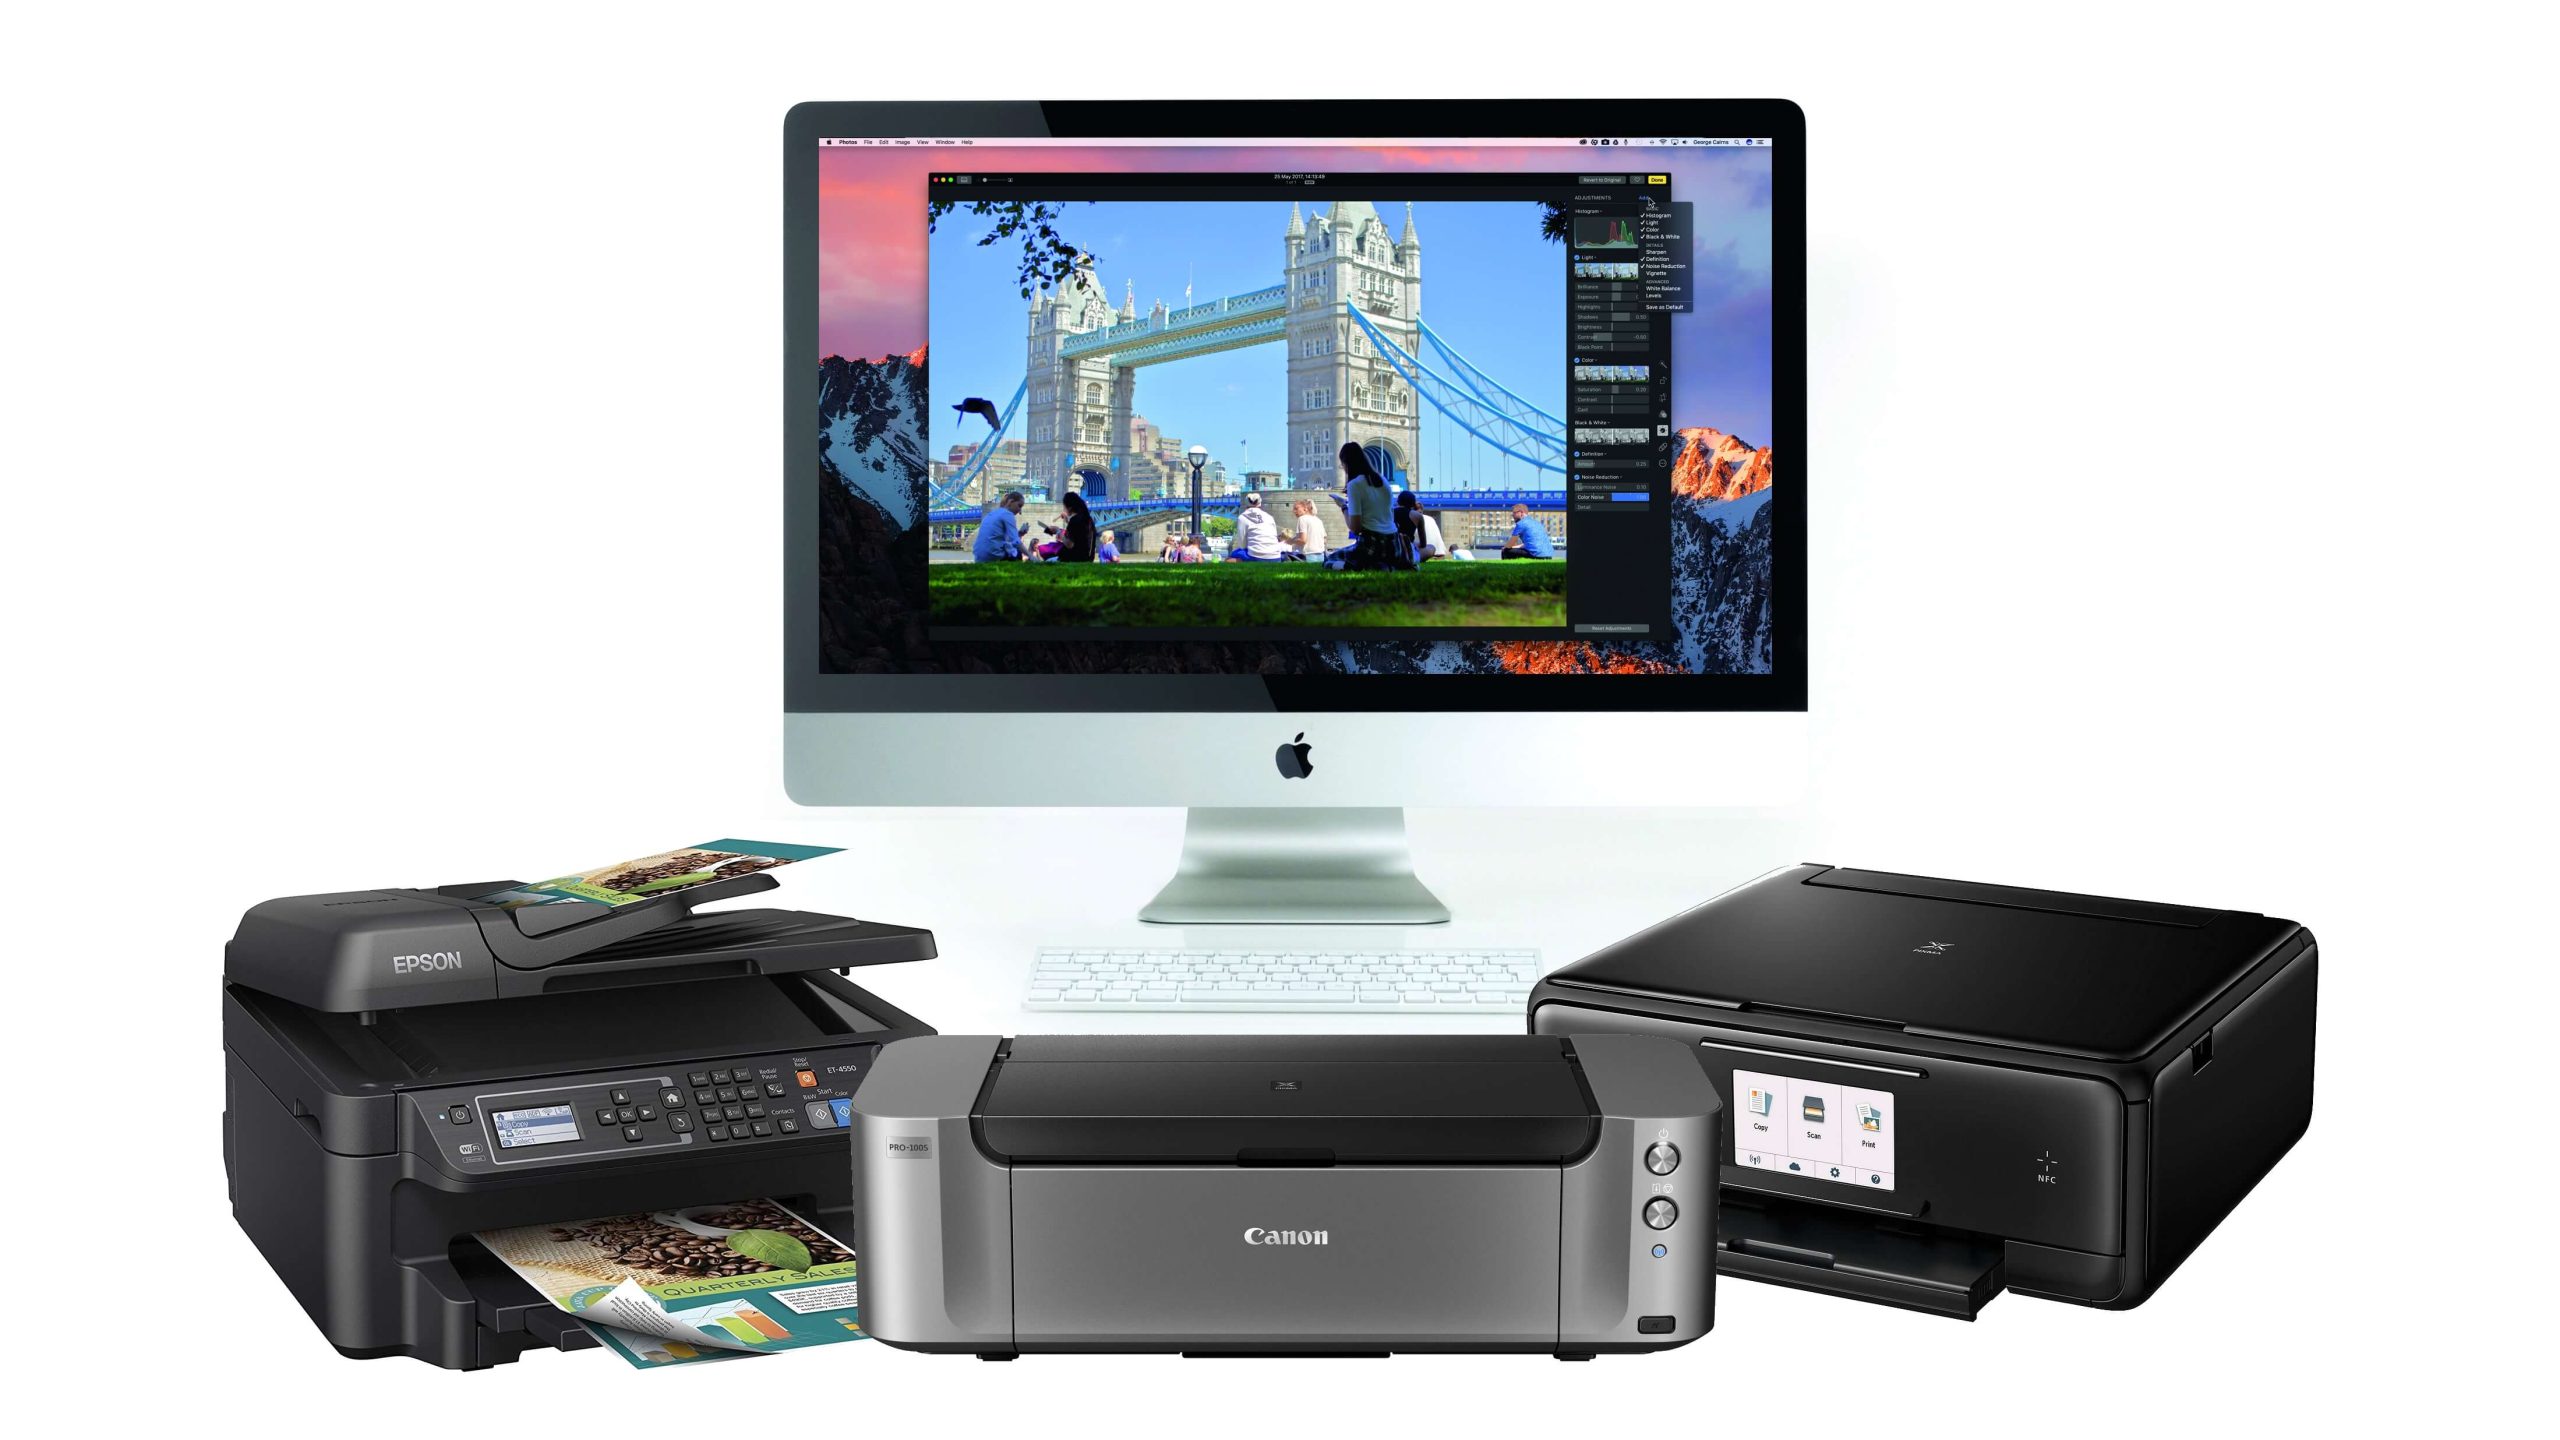 Uninstall Printer from Mac